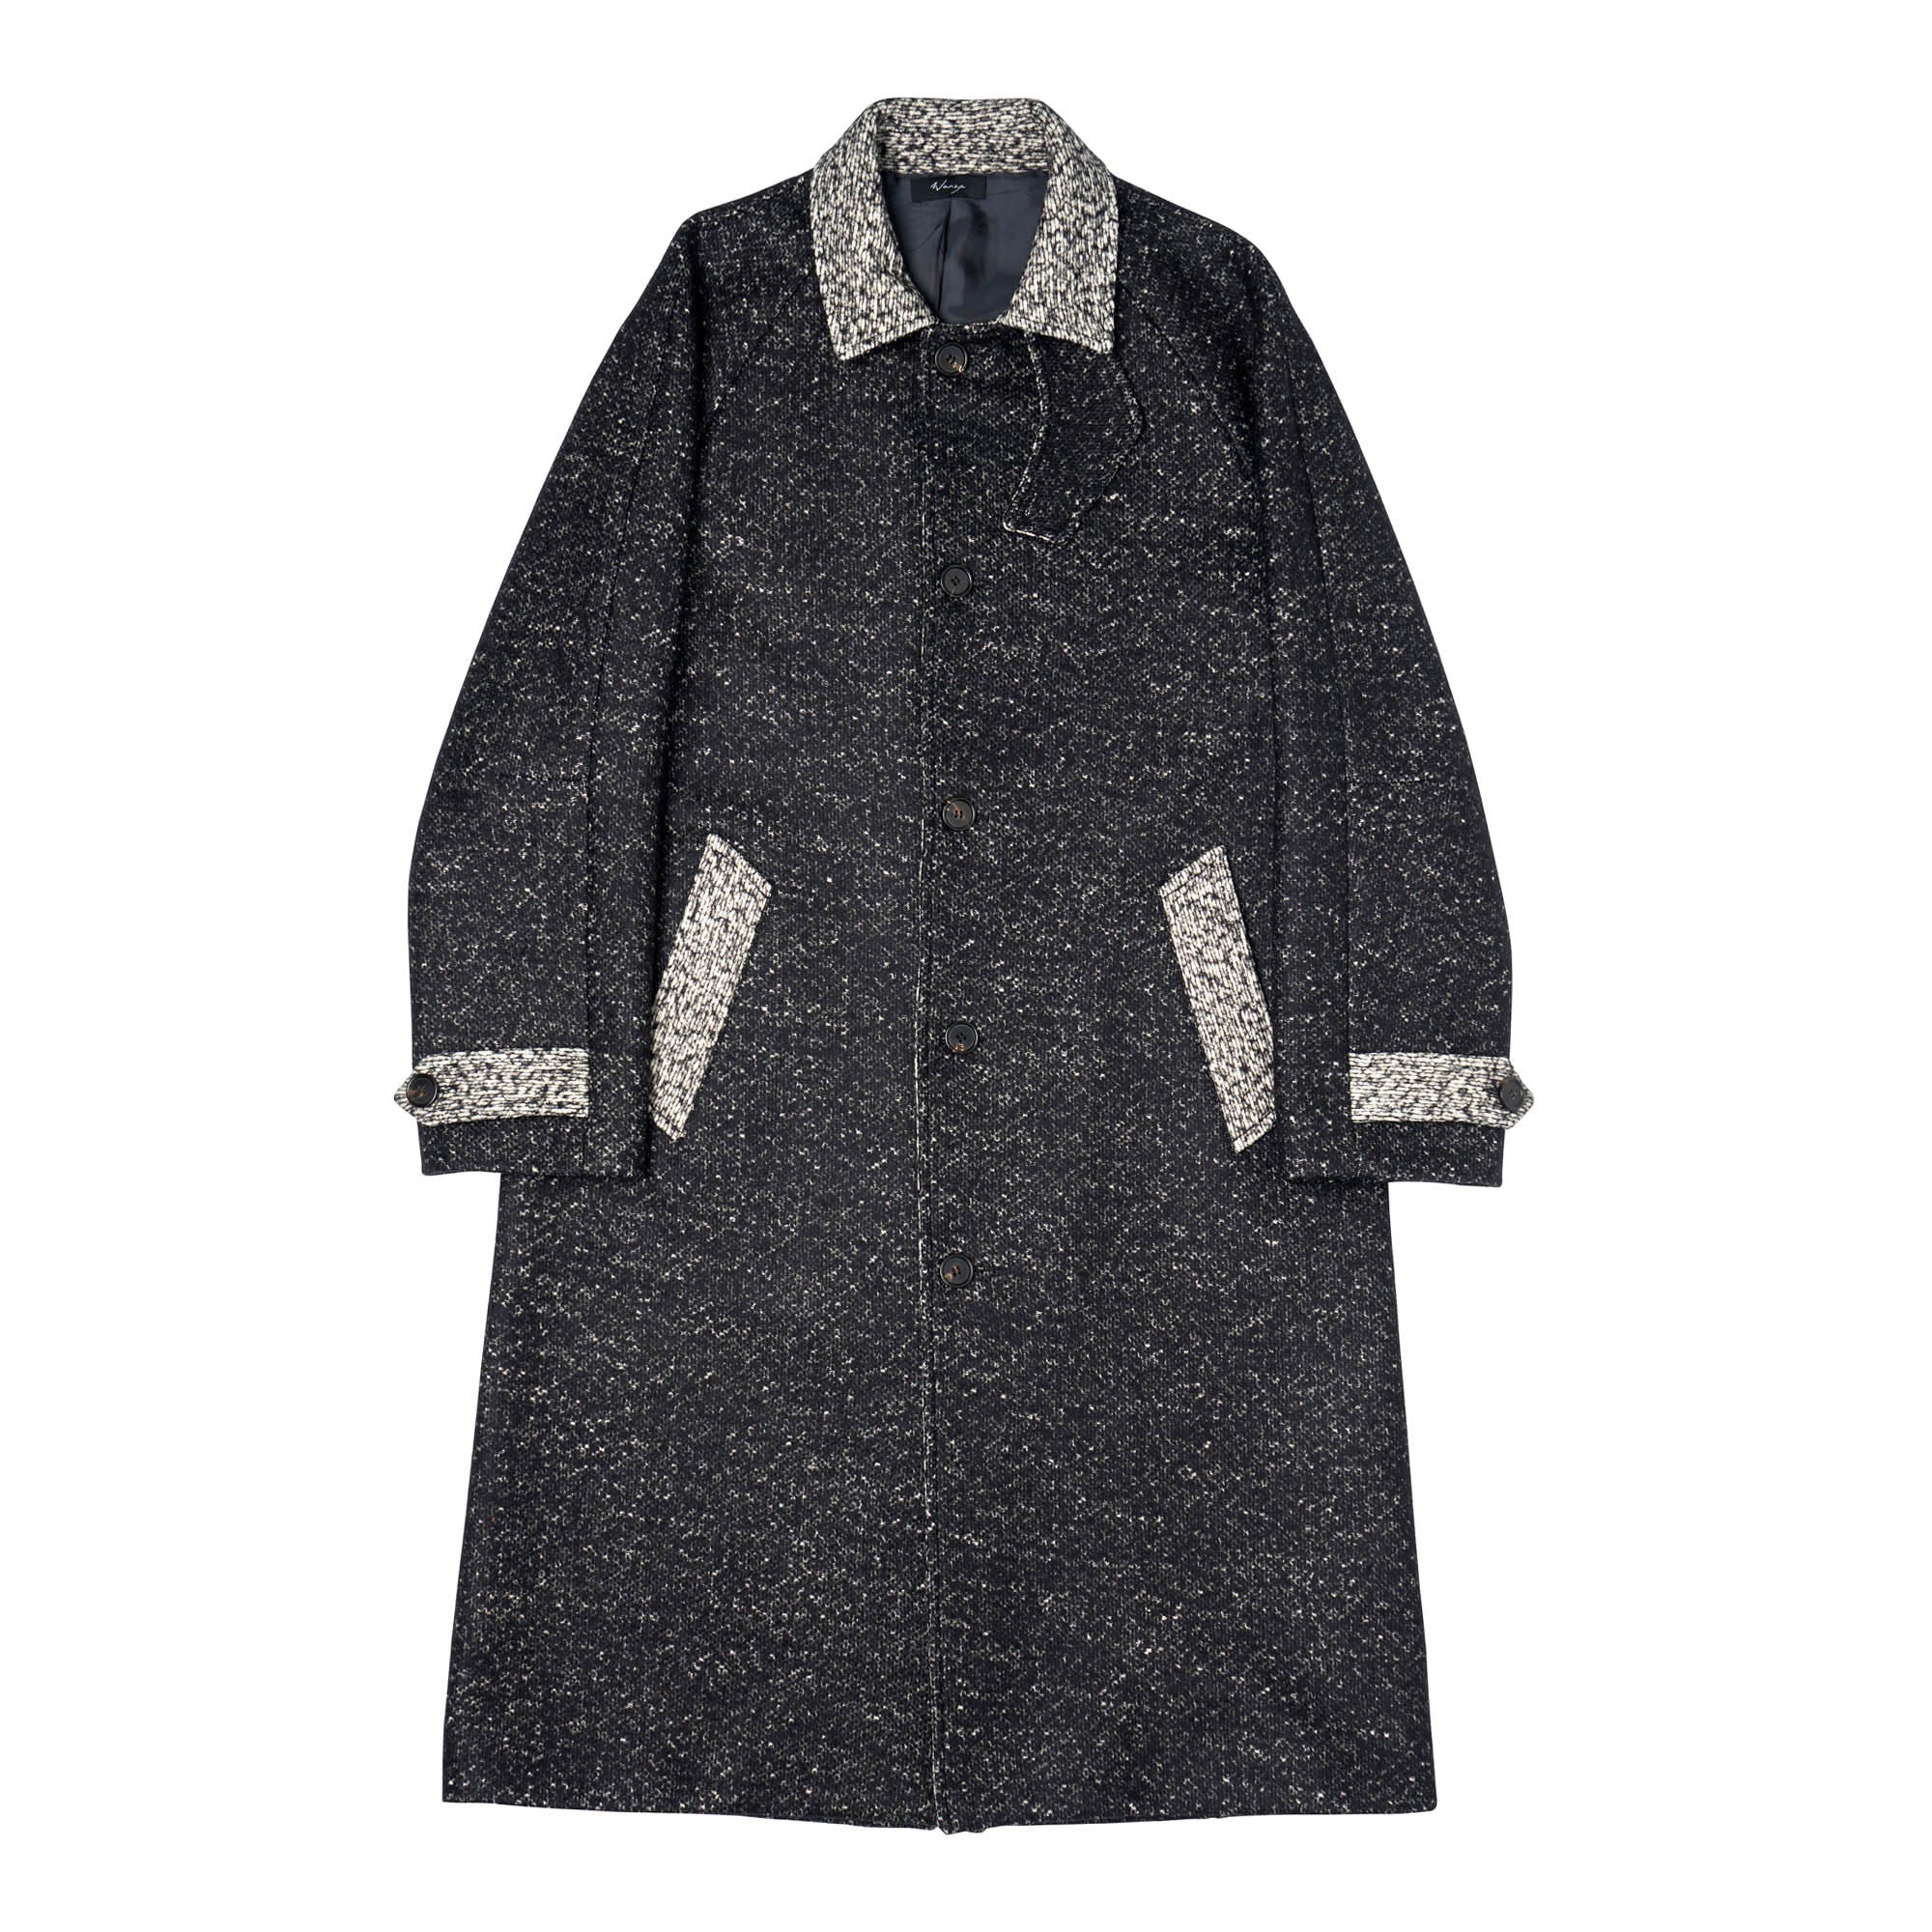 Raglan Overcoat Double-Faced Wool Black & White - PREORDER